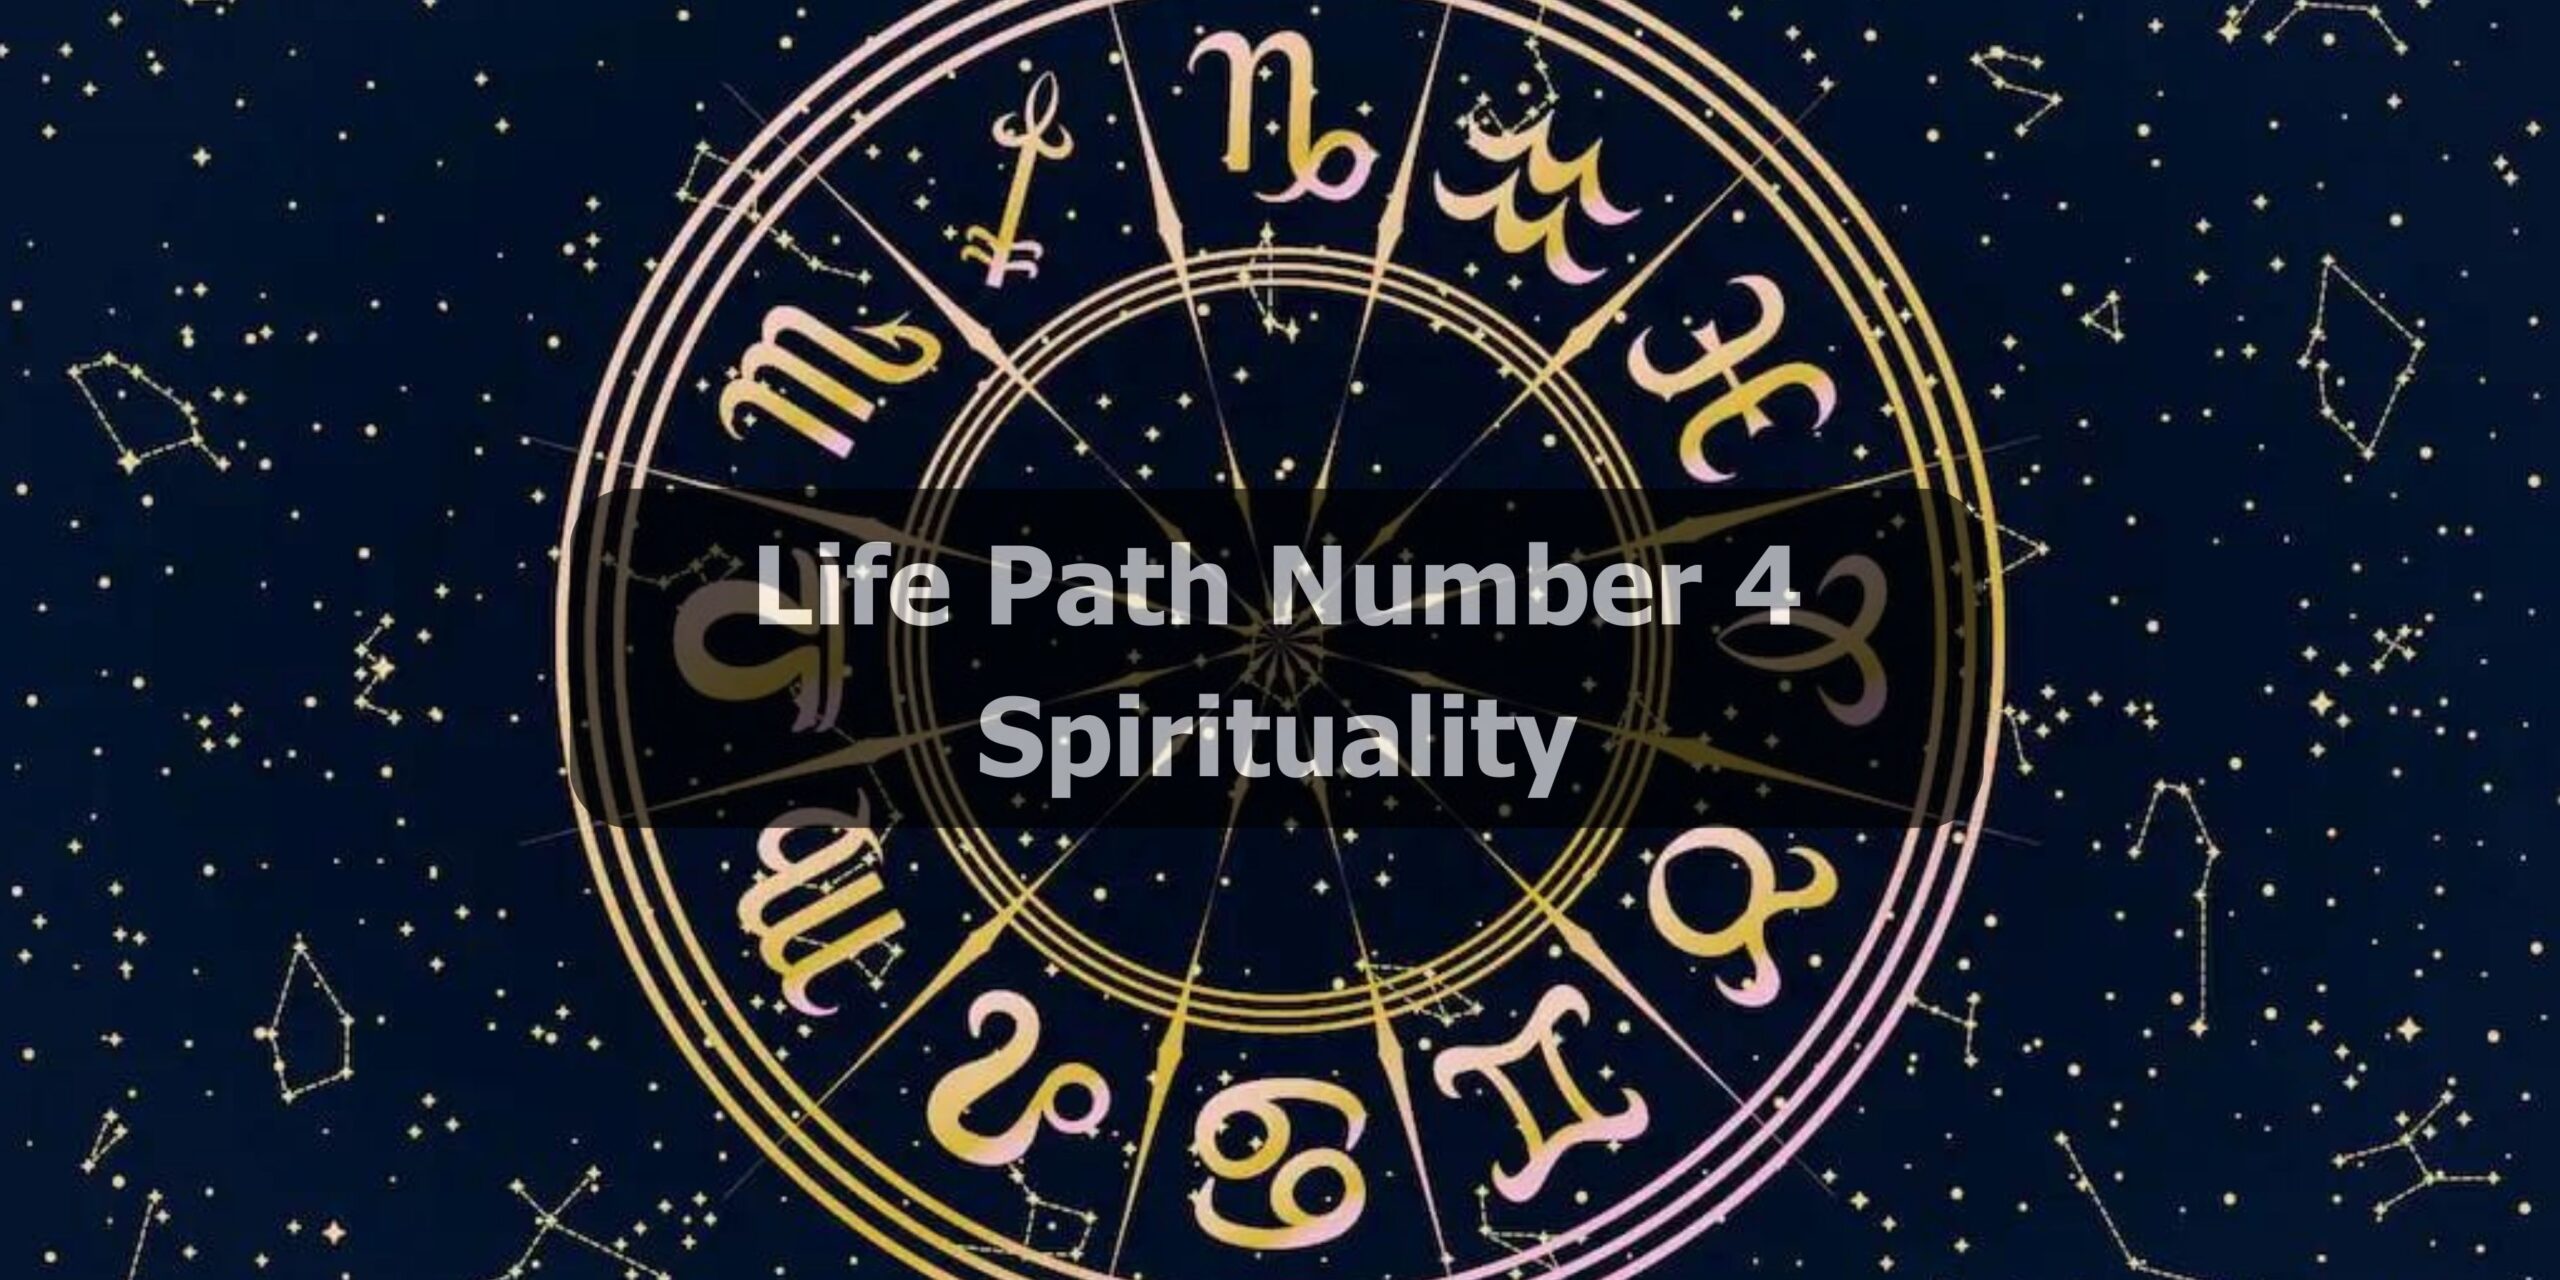 Life Path Number 4 Spirituality